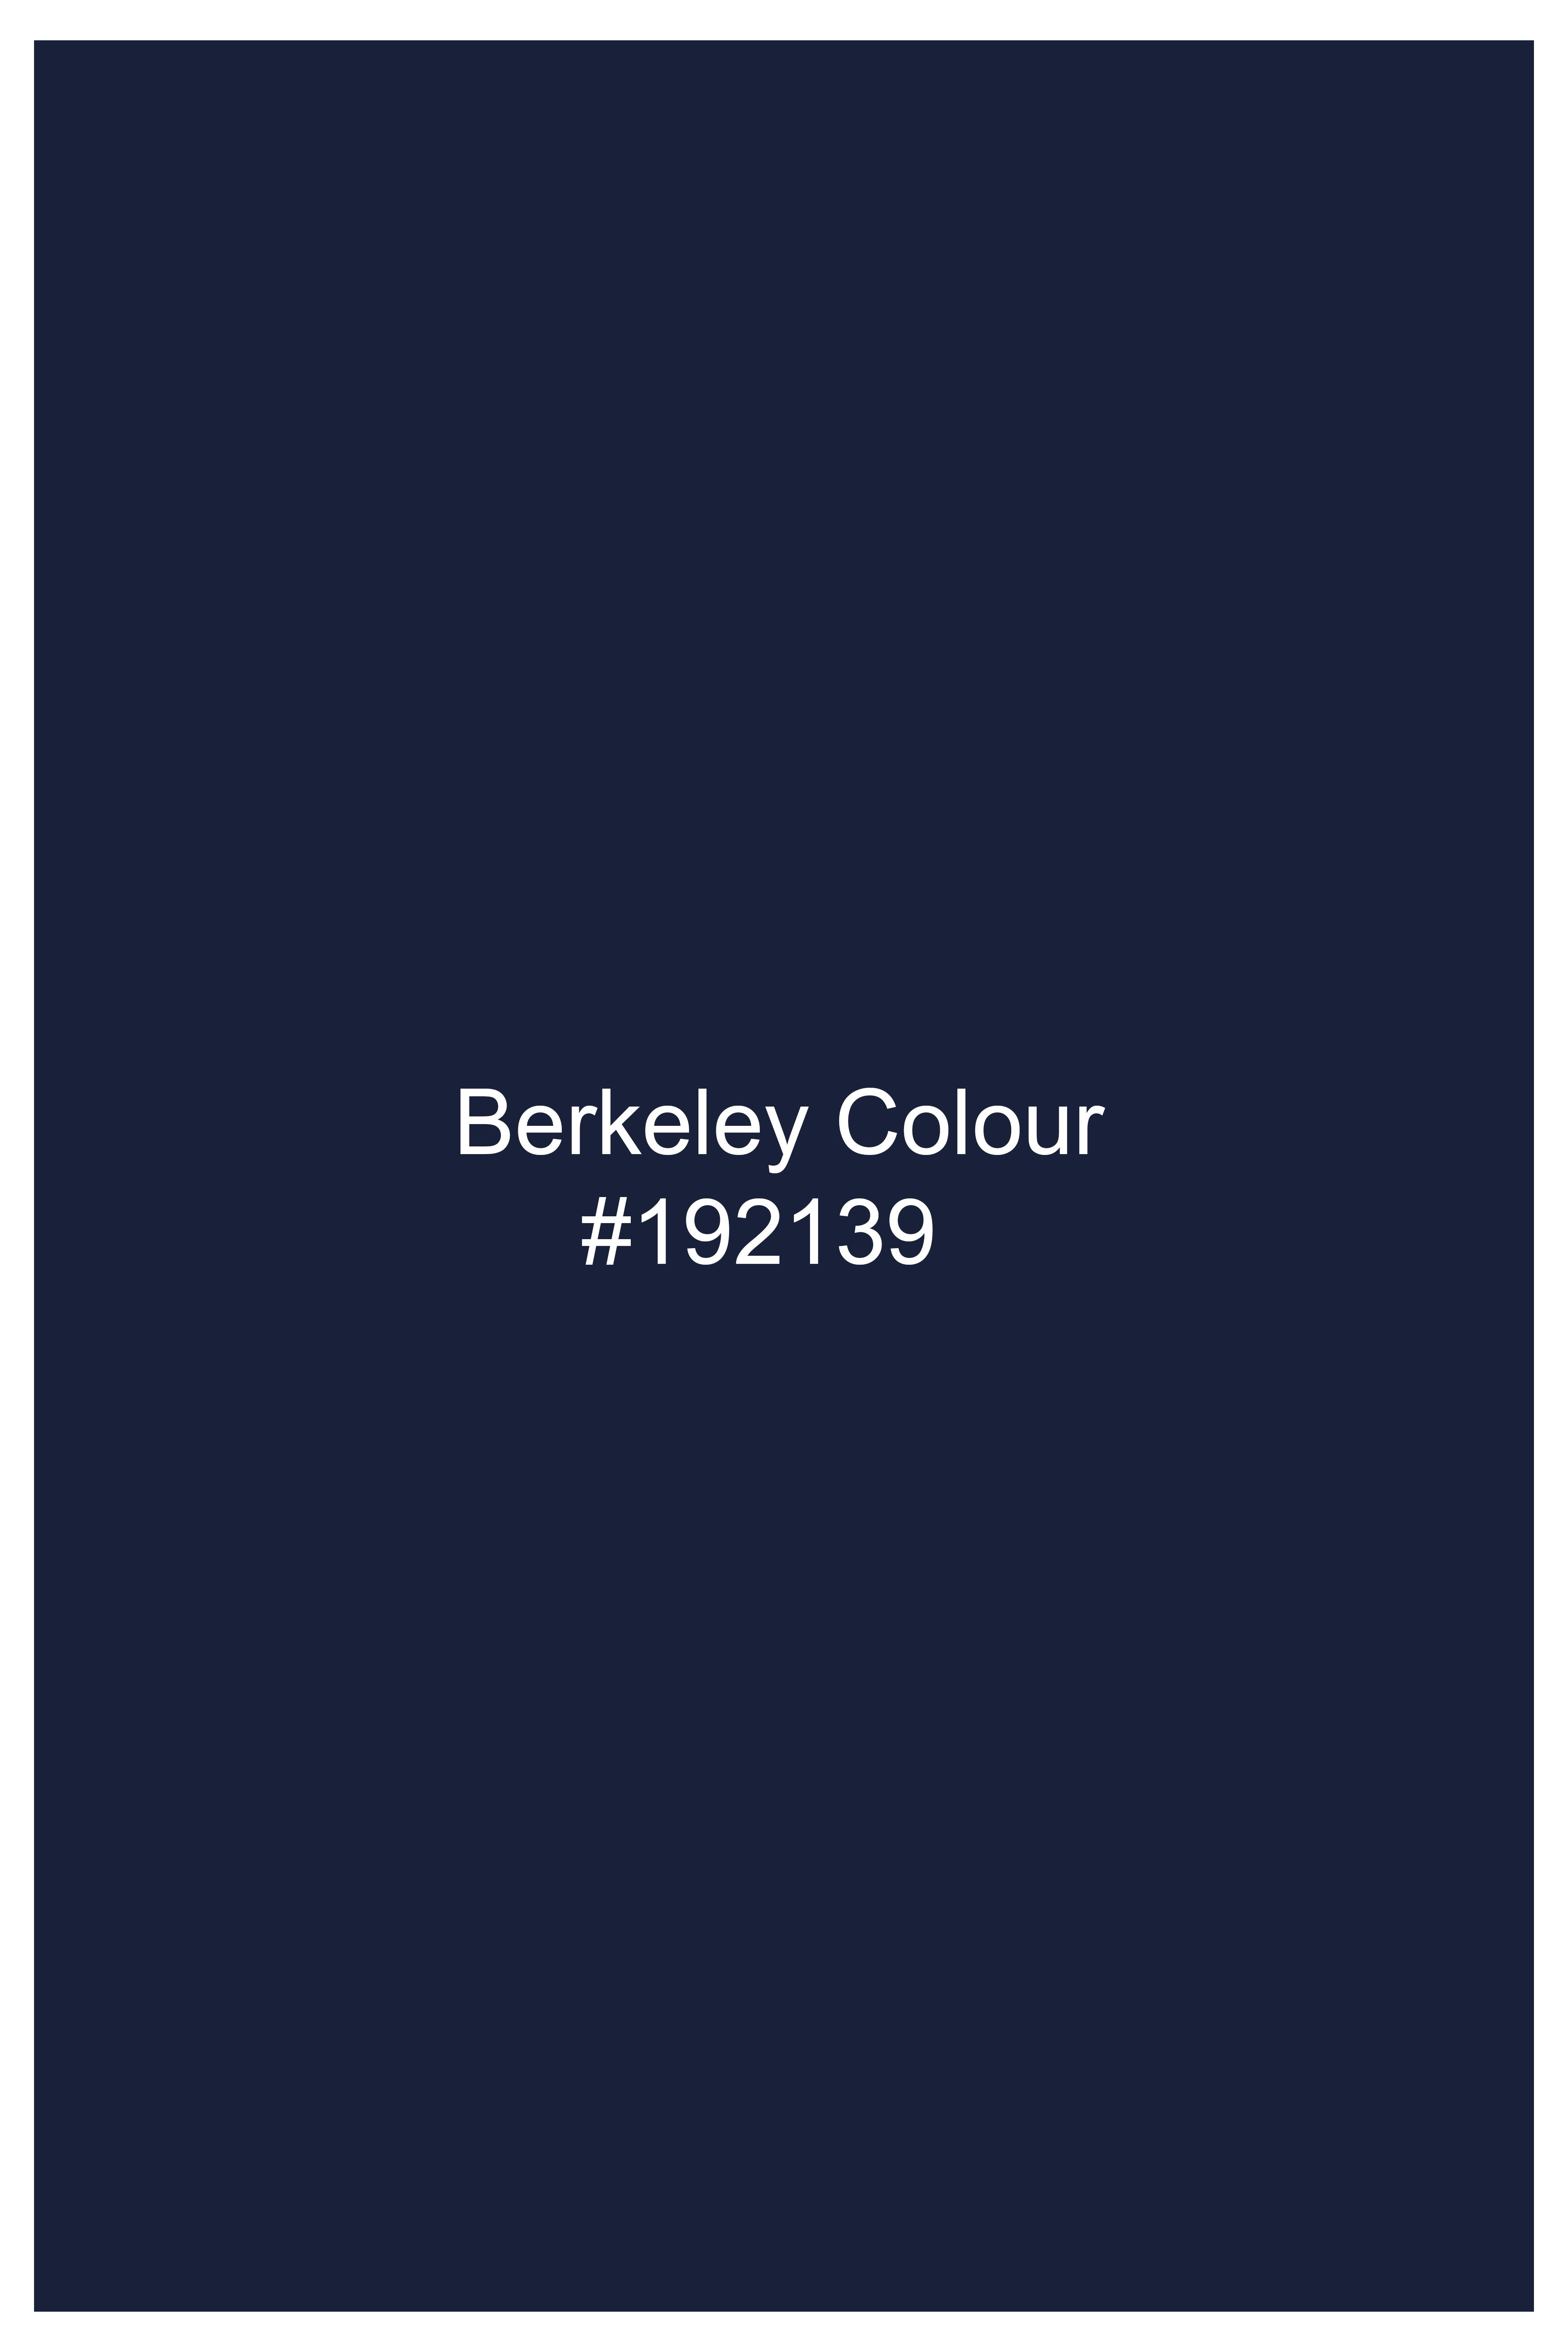 Berkeley Blue Wool Rich Cross Buttoned Bandhgala Suit ST2820-CBG2-36,ST2820-CBG2-38,ST2820-CBG2-40,ST2820-CBG2-42,ST2820-CBG2-44,ST2820-CBG2-46,ST2820-CBG2-48,ST2820-CBG2-50,ST2820-CBG2-52,ST2820-CBG2-54,ST2820-CBG2-56,ST2820-CBG2-58,ST2820-CBG2-60